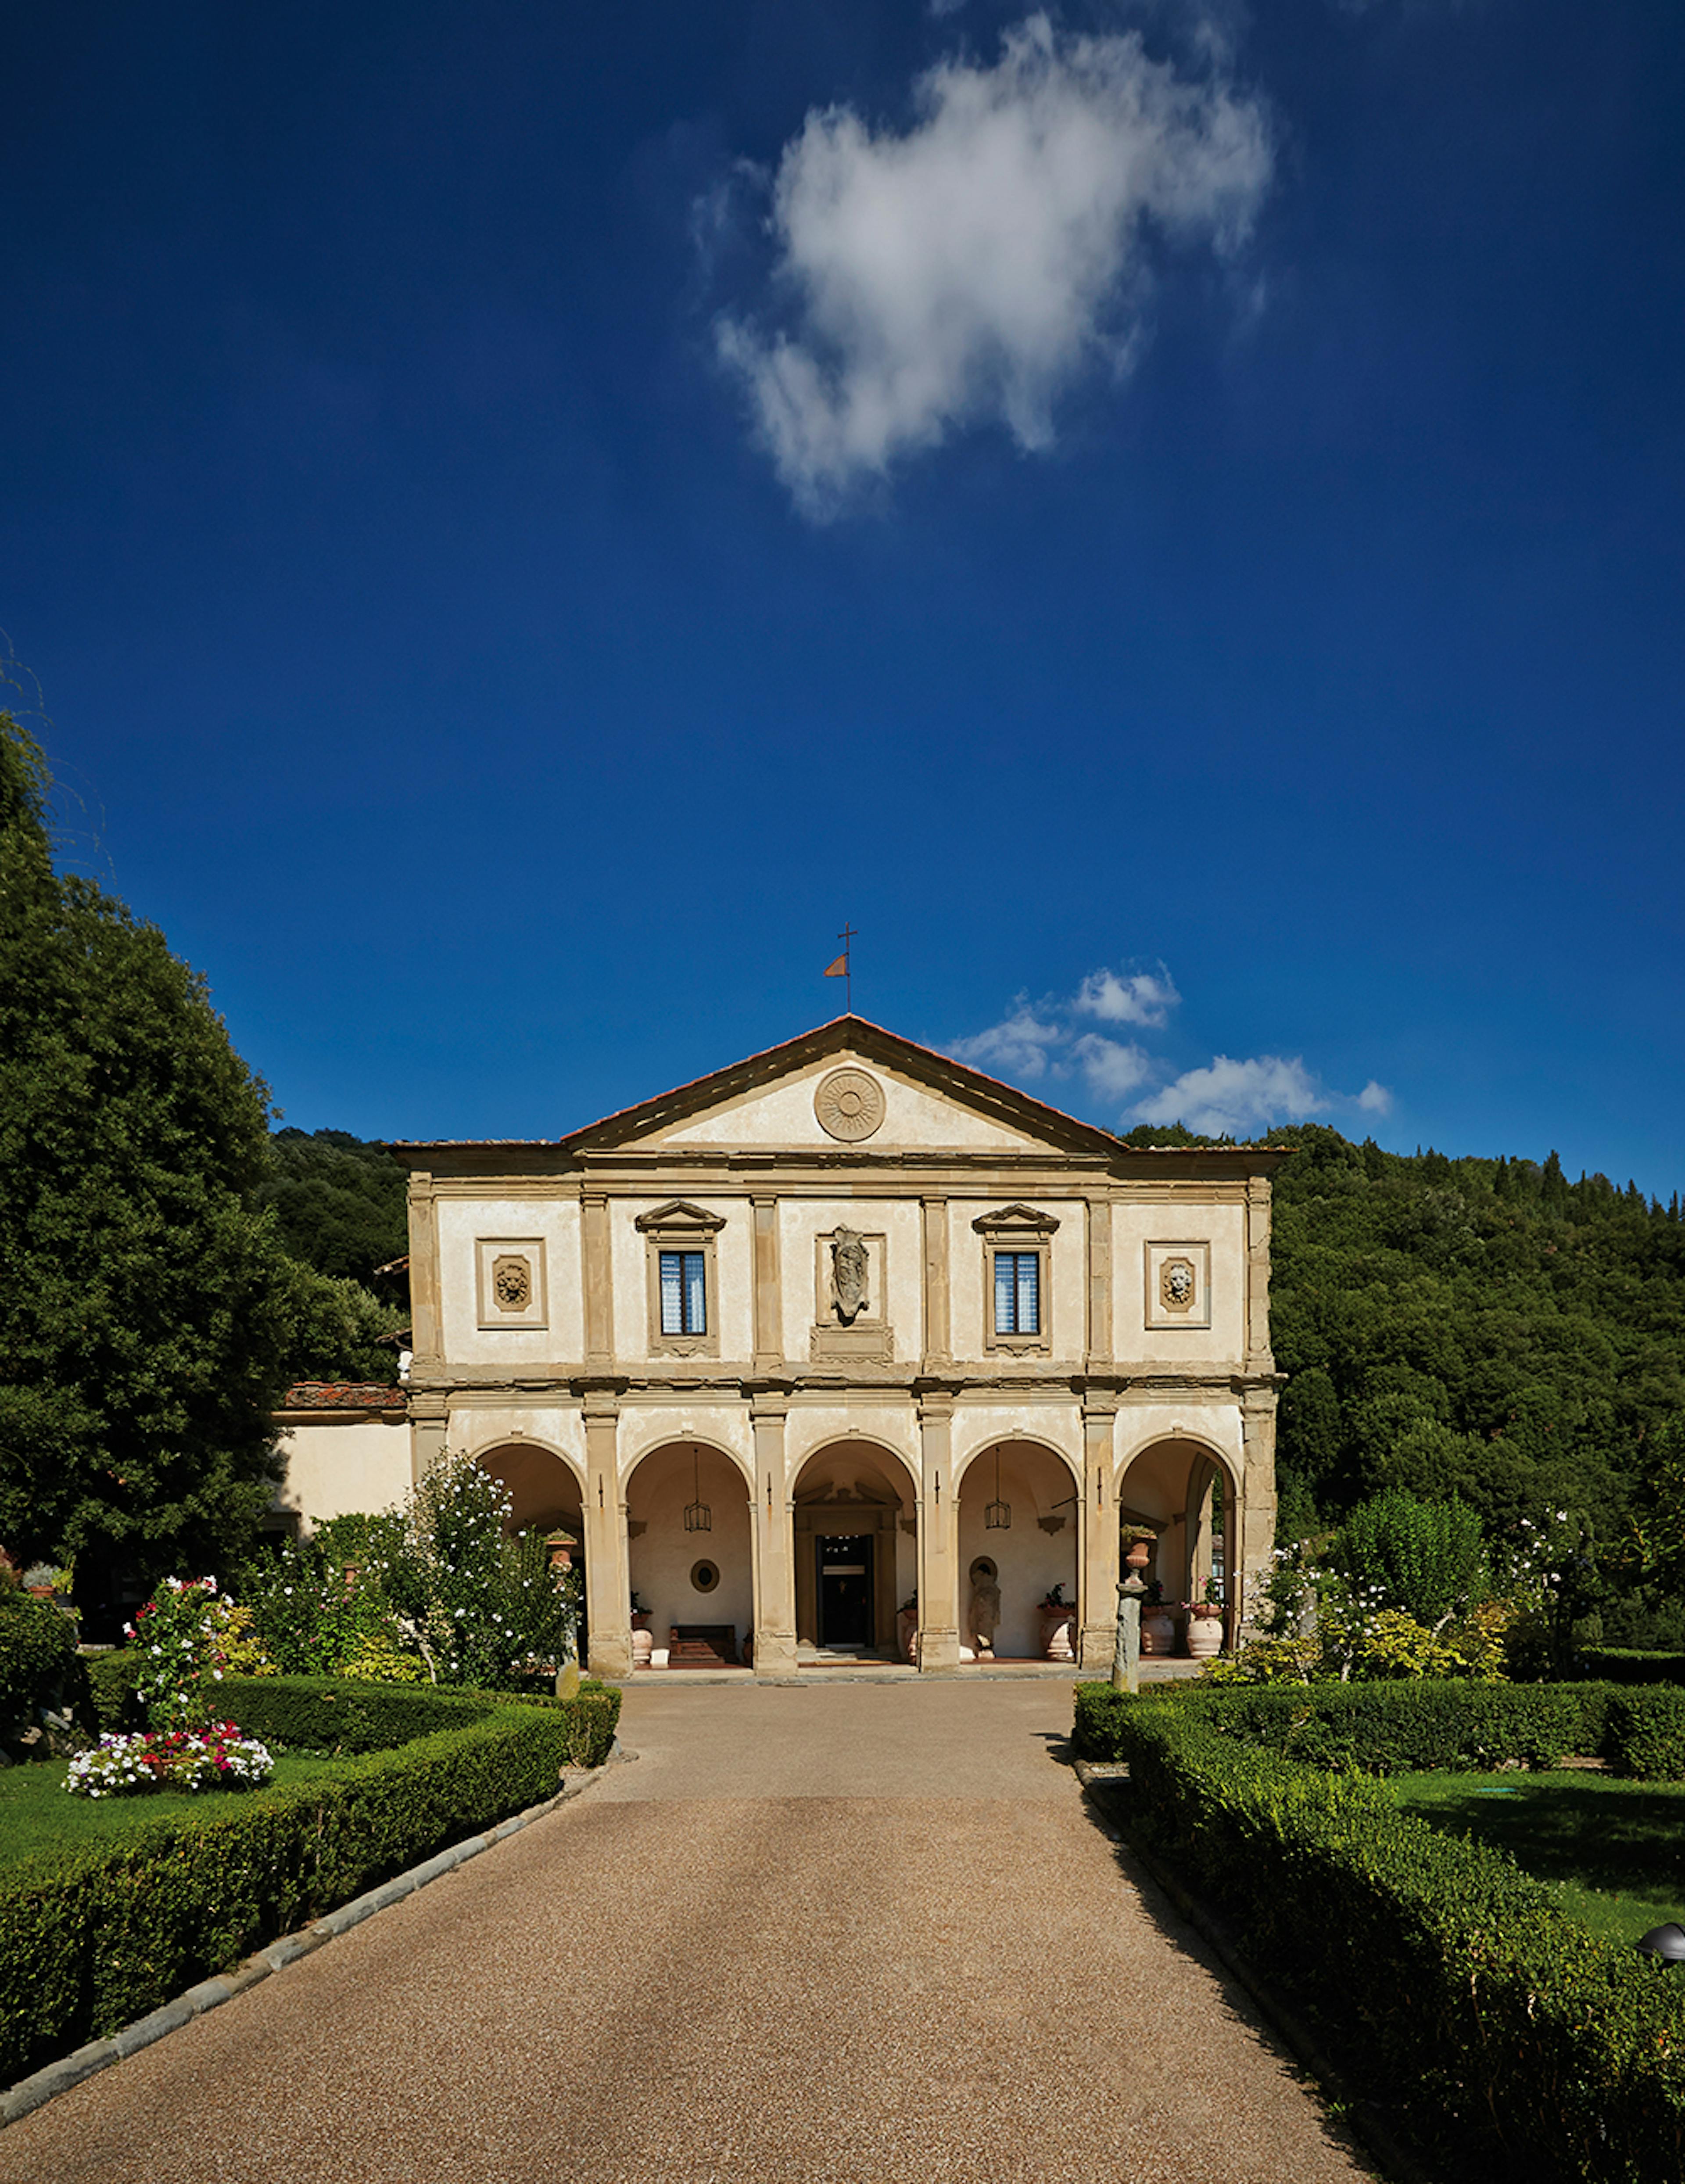 Belmond Villa San Michele, Florence, Italy